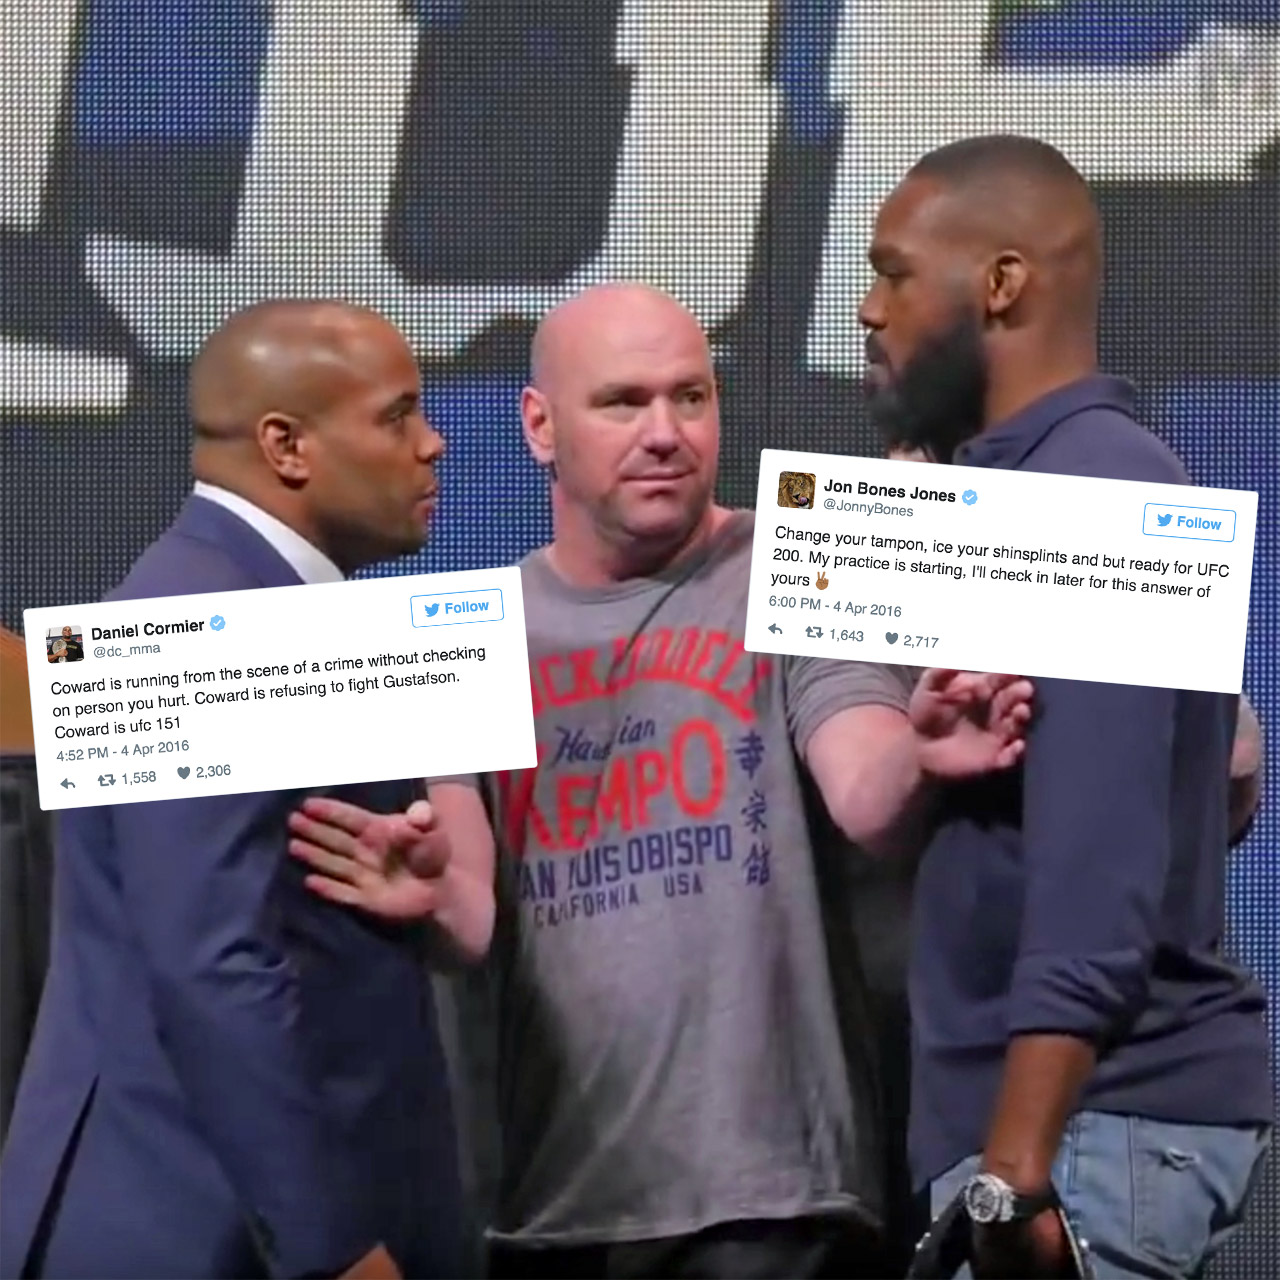 Daniel Cormier and Jon Jones fight on Twitter after UFC 197 date nixed